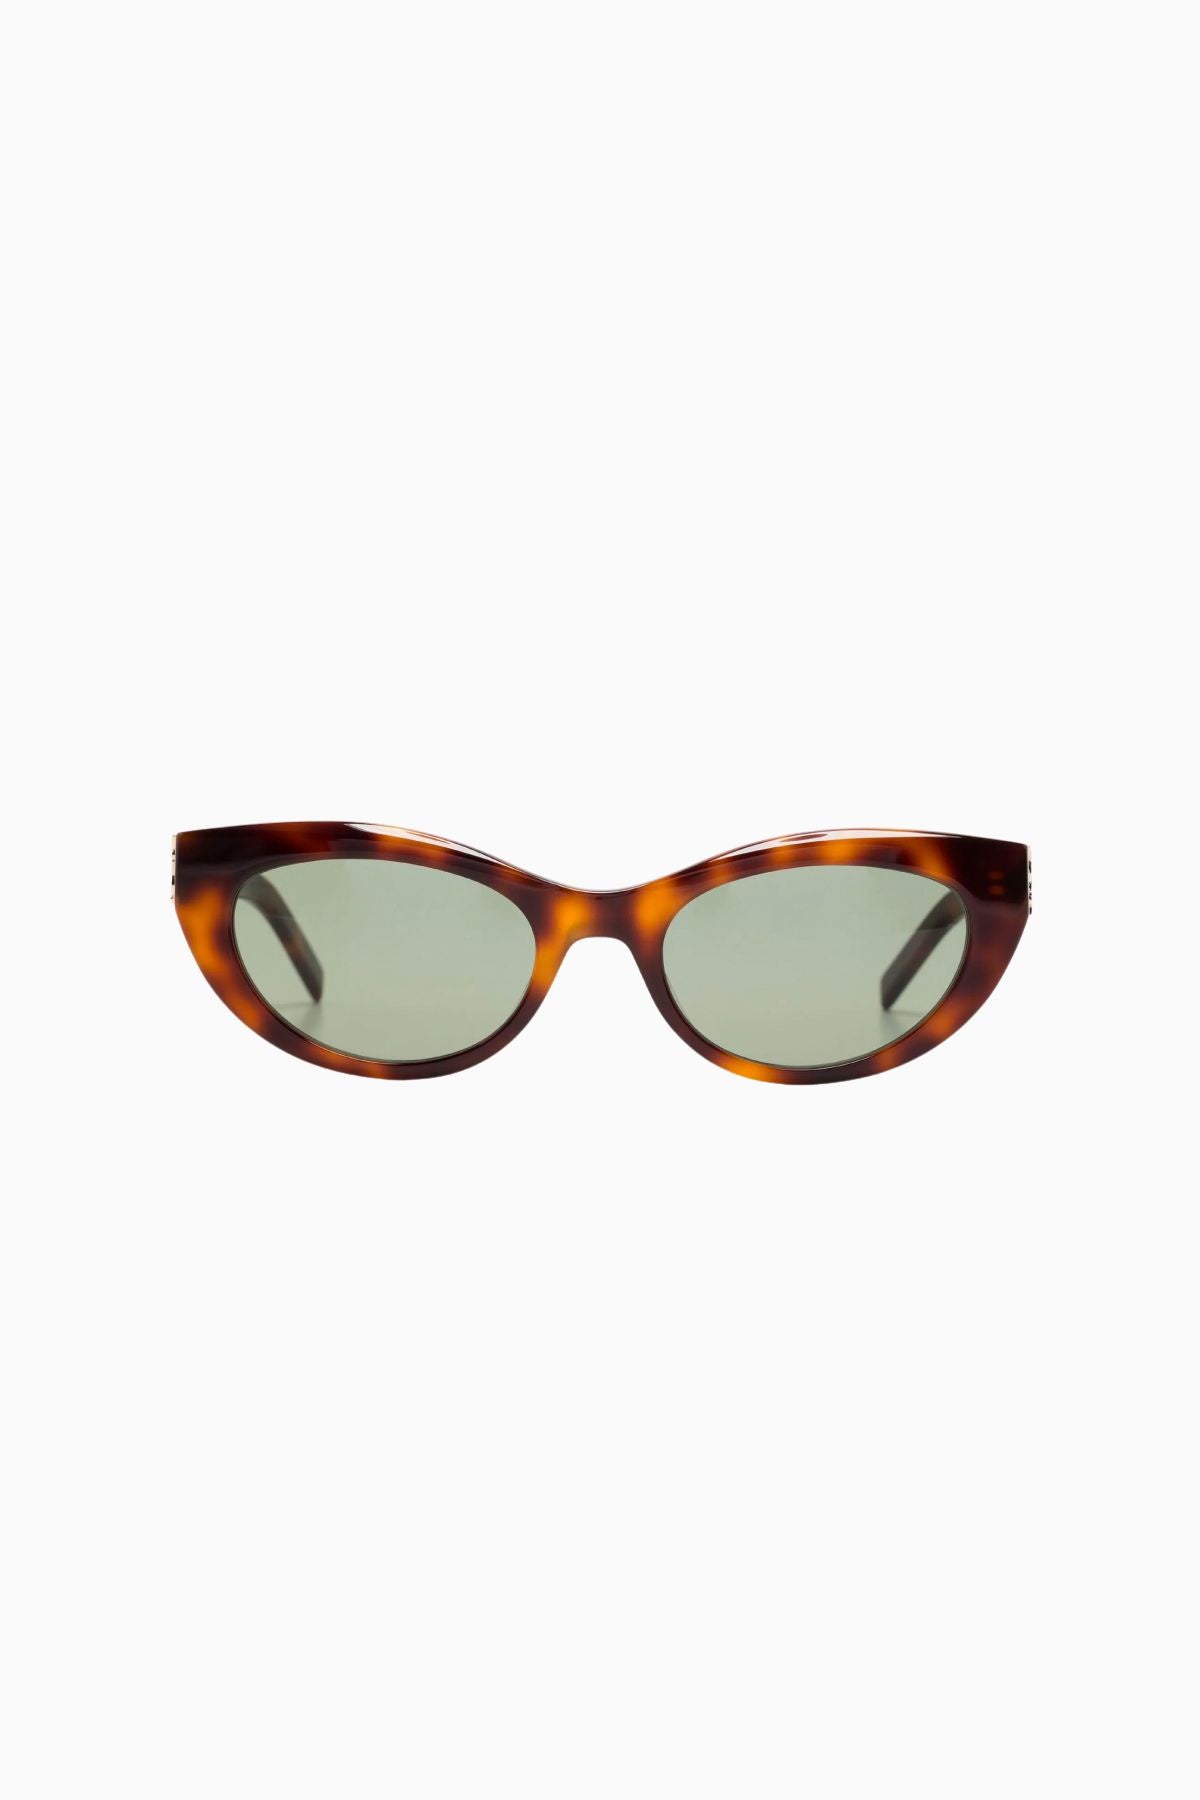 Saint Laurent Slim Cat Eye Sunglasses - Havana